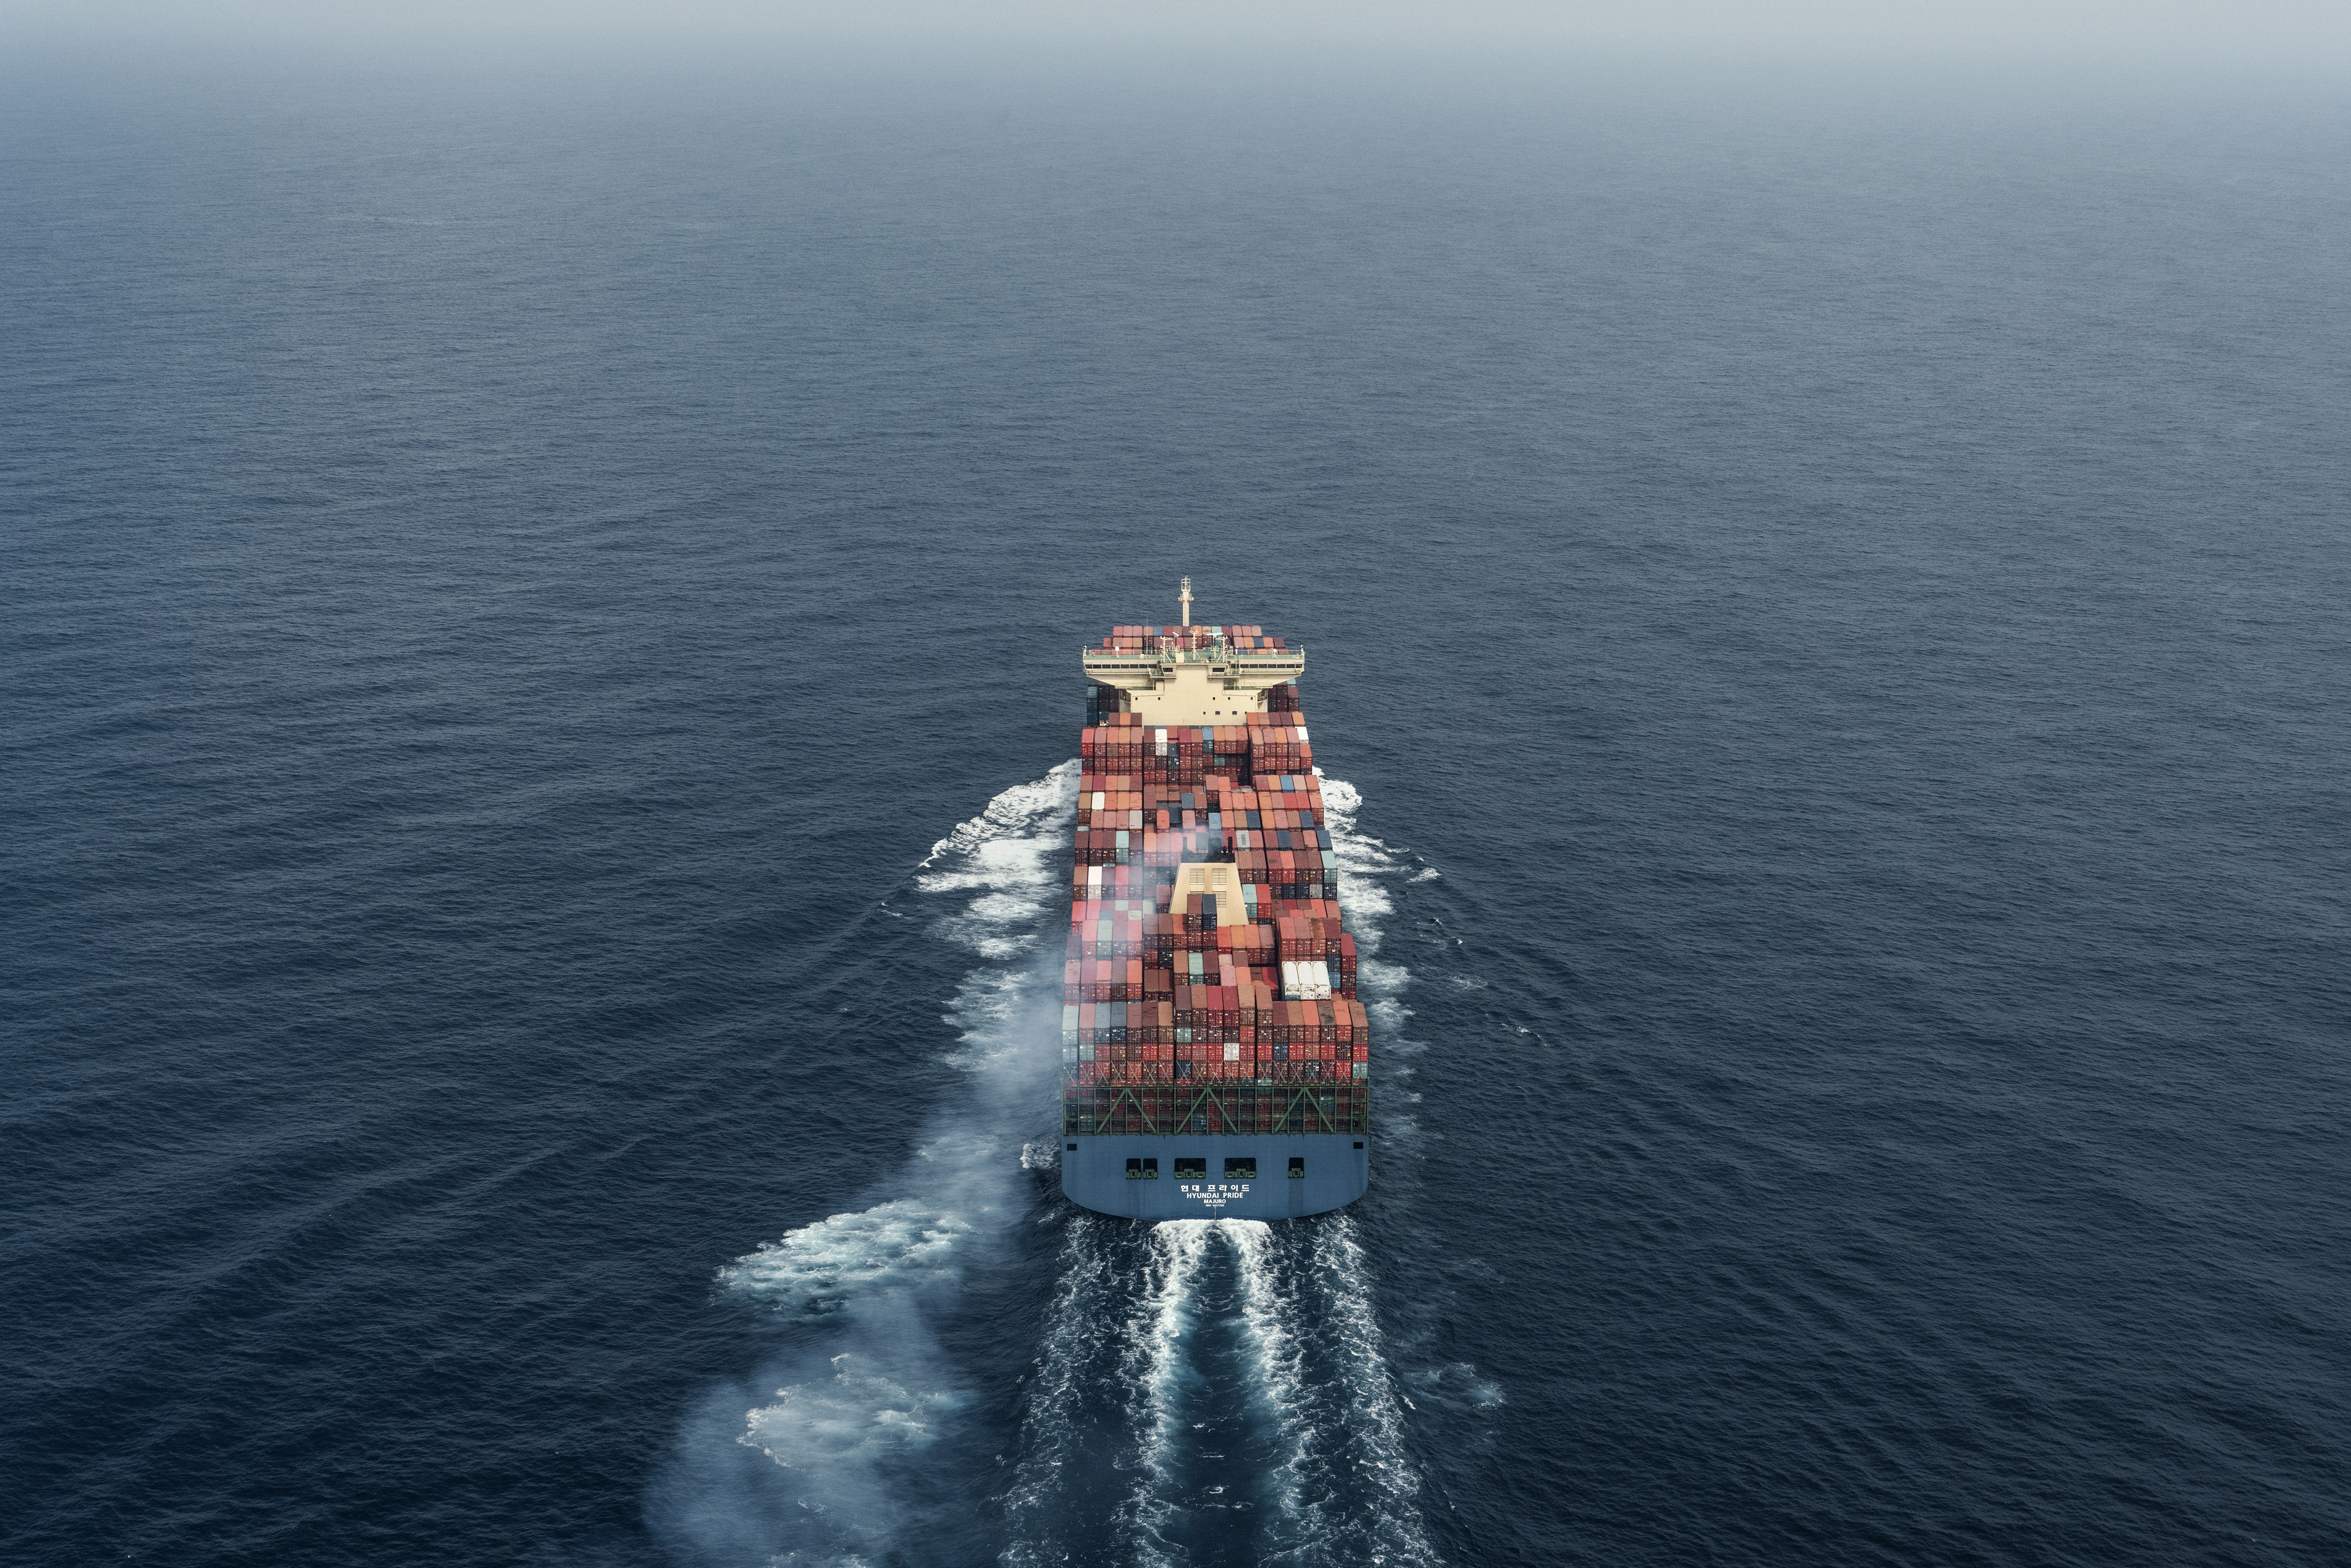 A cargo ship navigates one of the worlds busiest shipping lanes, near Hambantota, Sri Lanka, May 2, 2018.